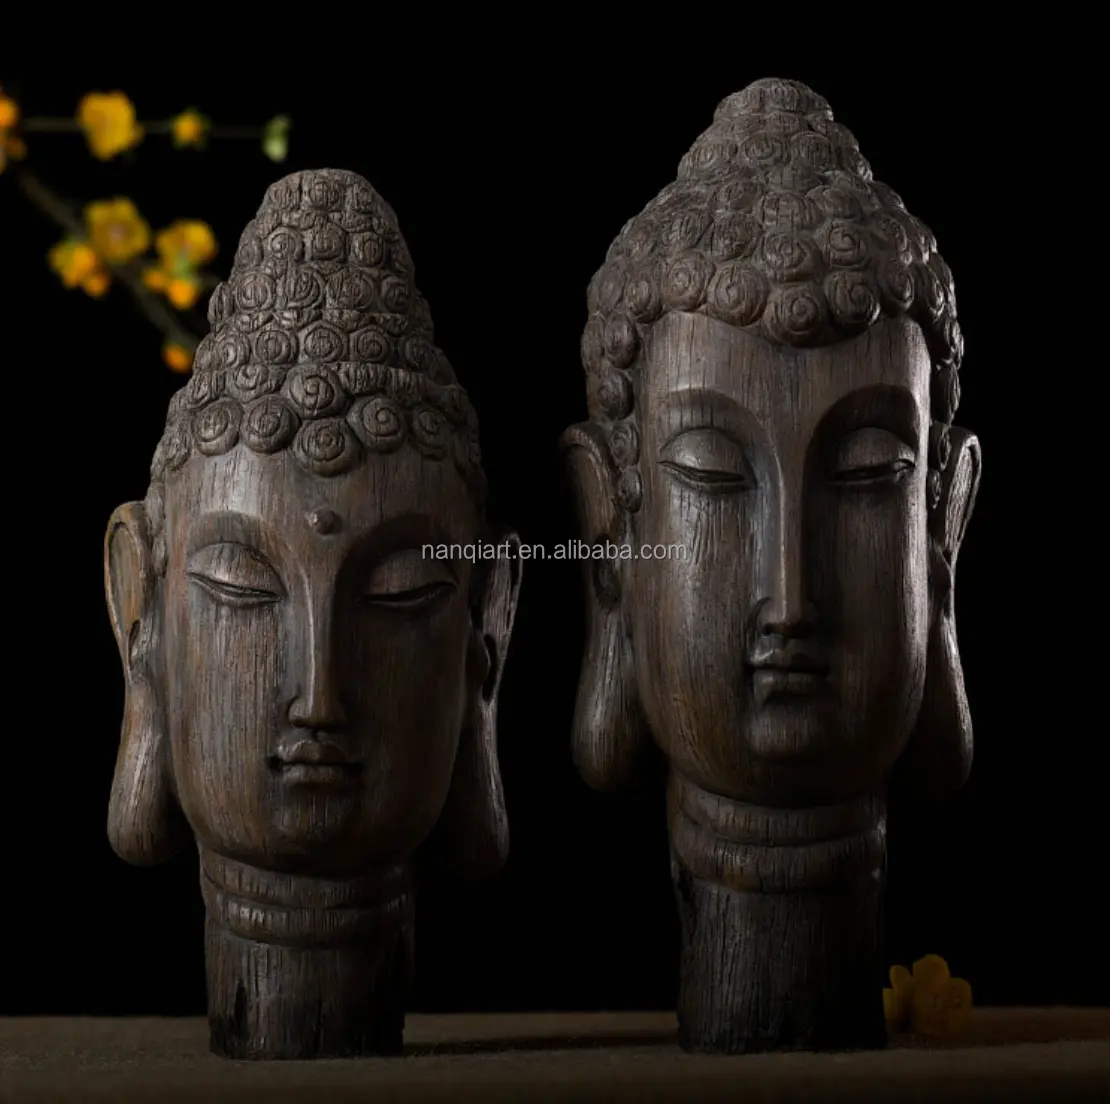 Wholesale Cheap Resin Stone Figure Models Handmade Lifelike Buddha Head Statues Indoor Home Office Desktop Decorations Ornament